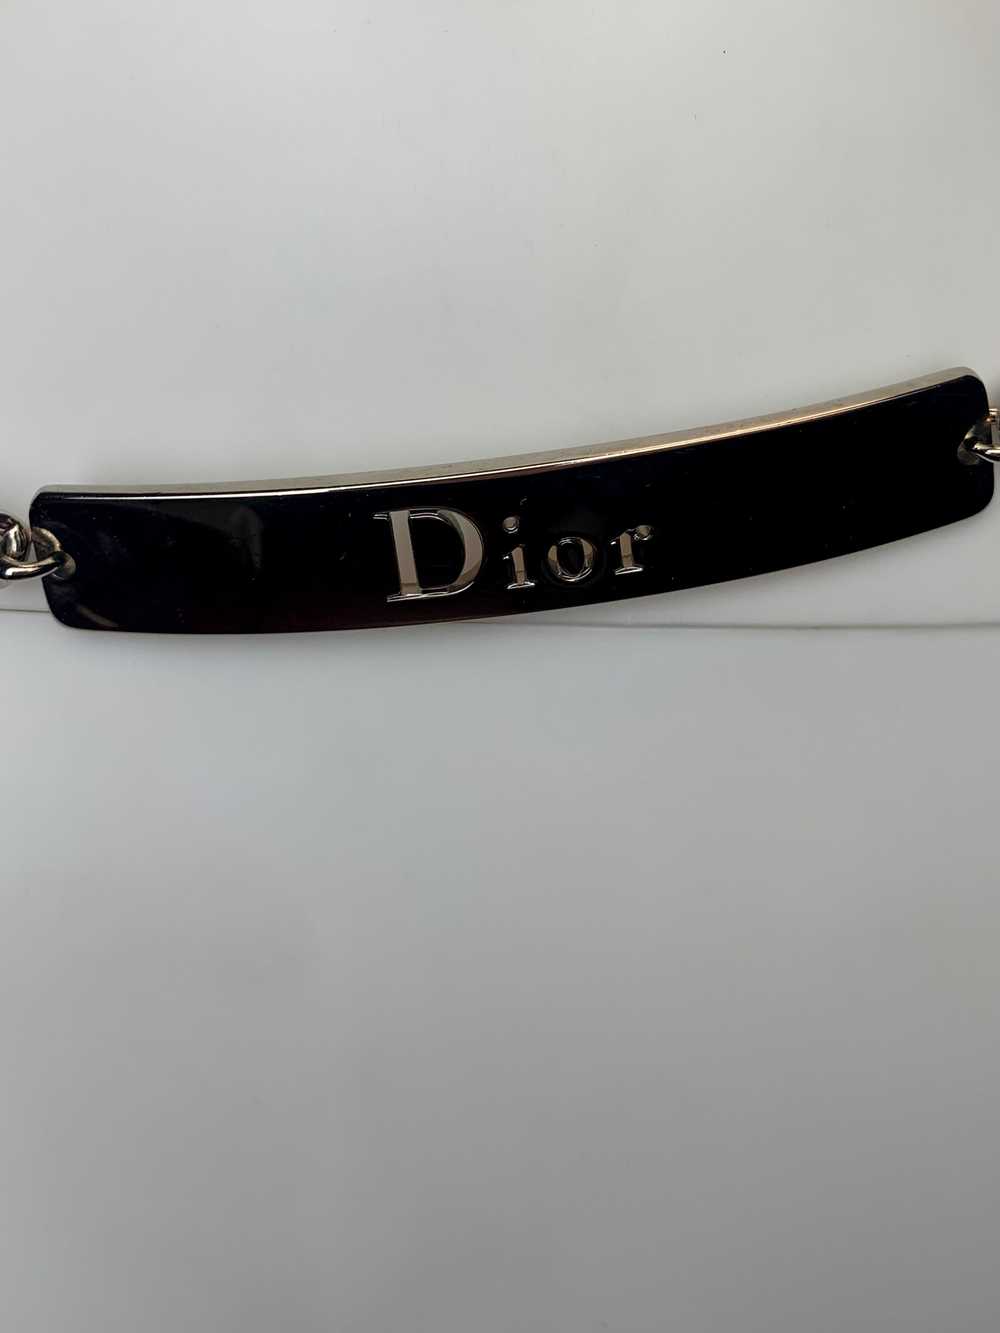 Dior by John Galliano SS 2003 Belt - image 6